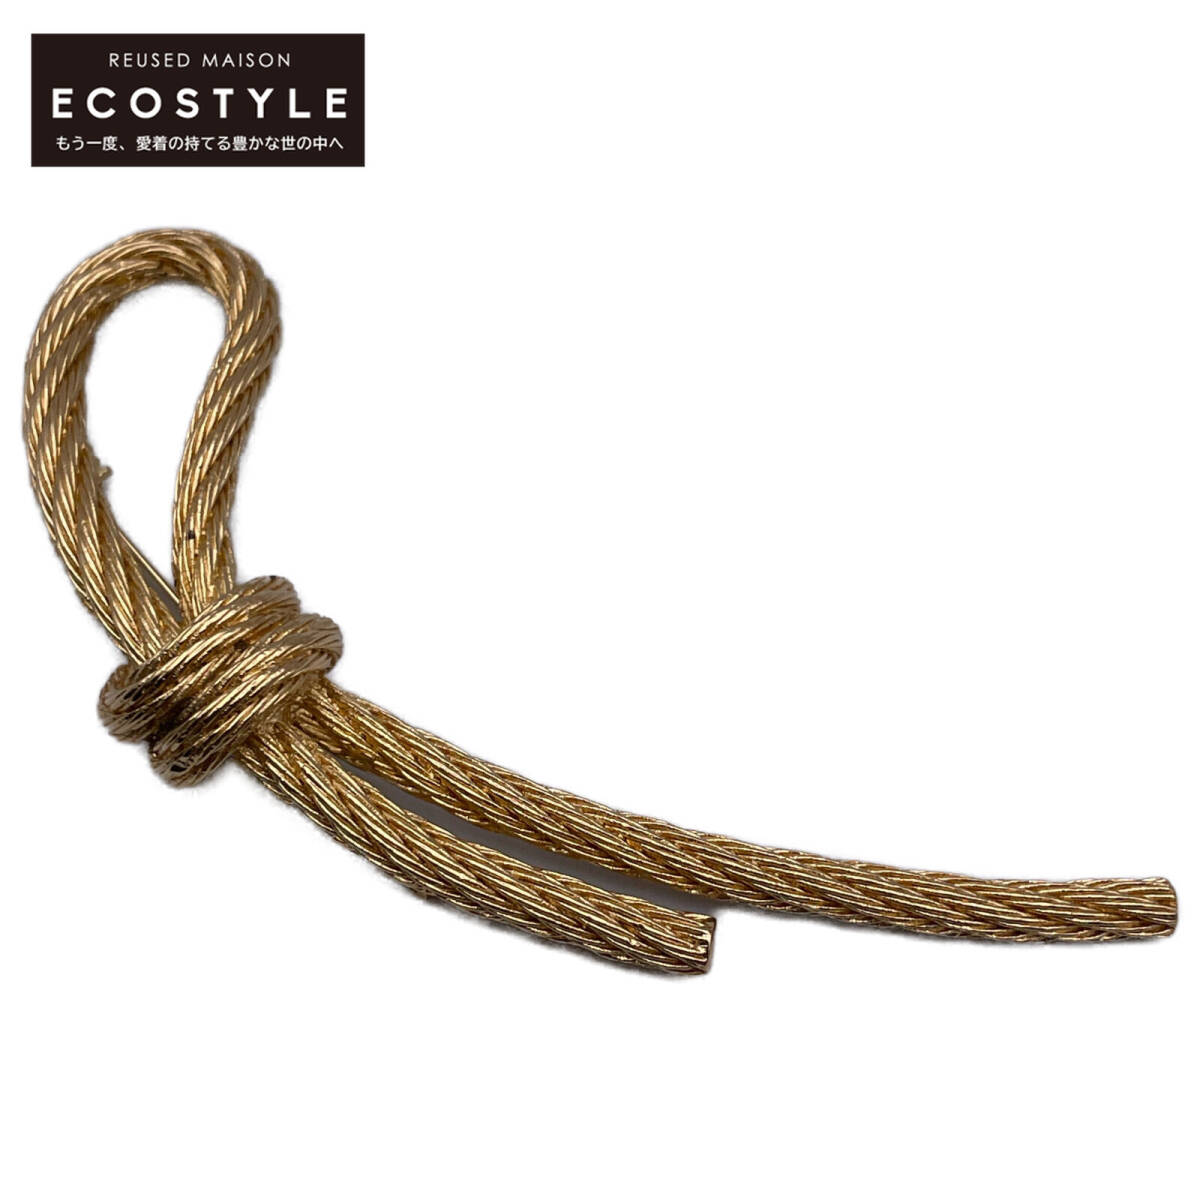 1 jpy Christian Dior Christian Dior Gold GP rope design brooch brooch 